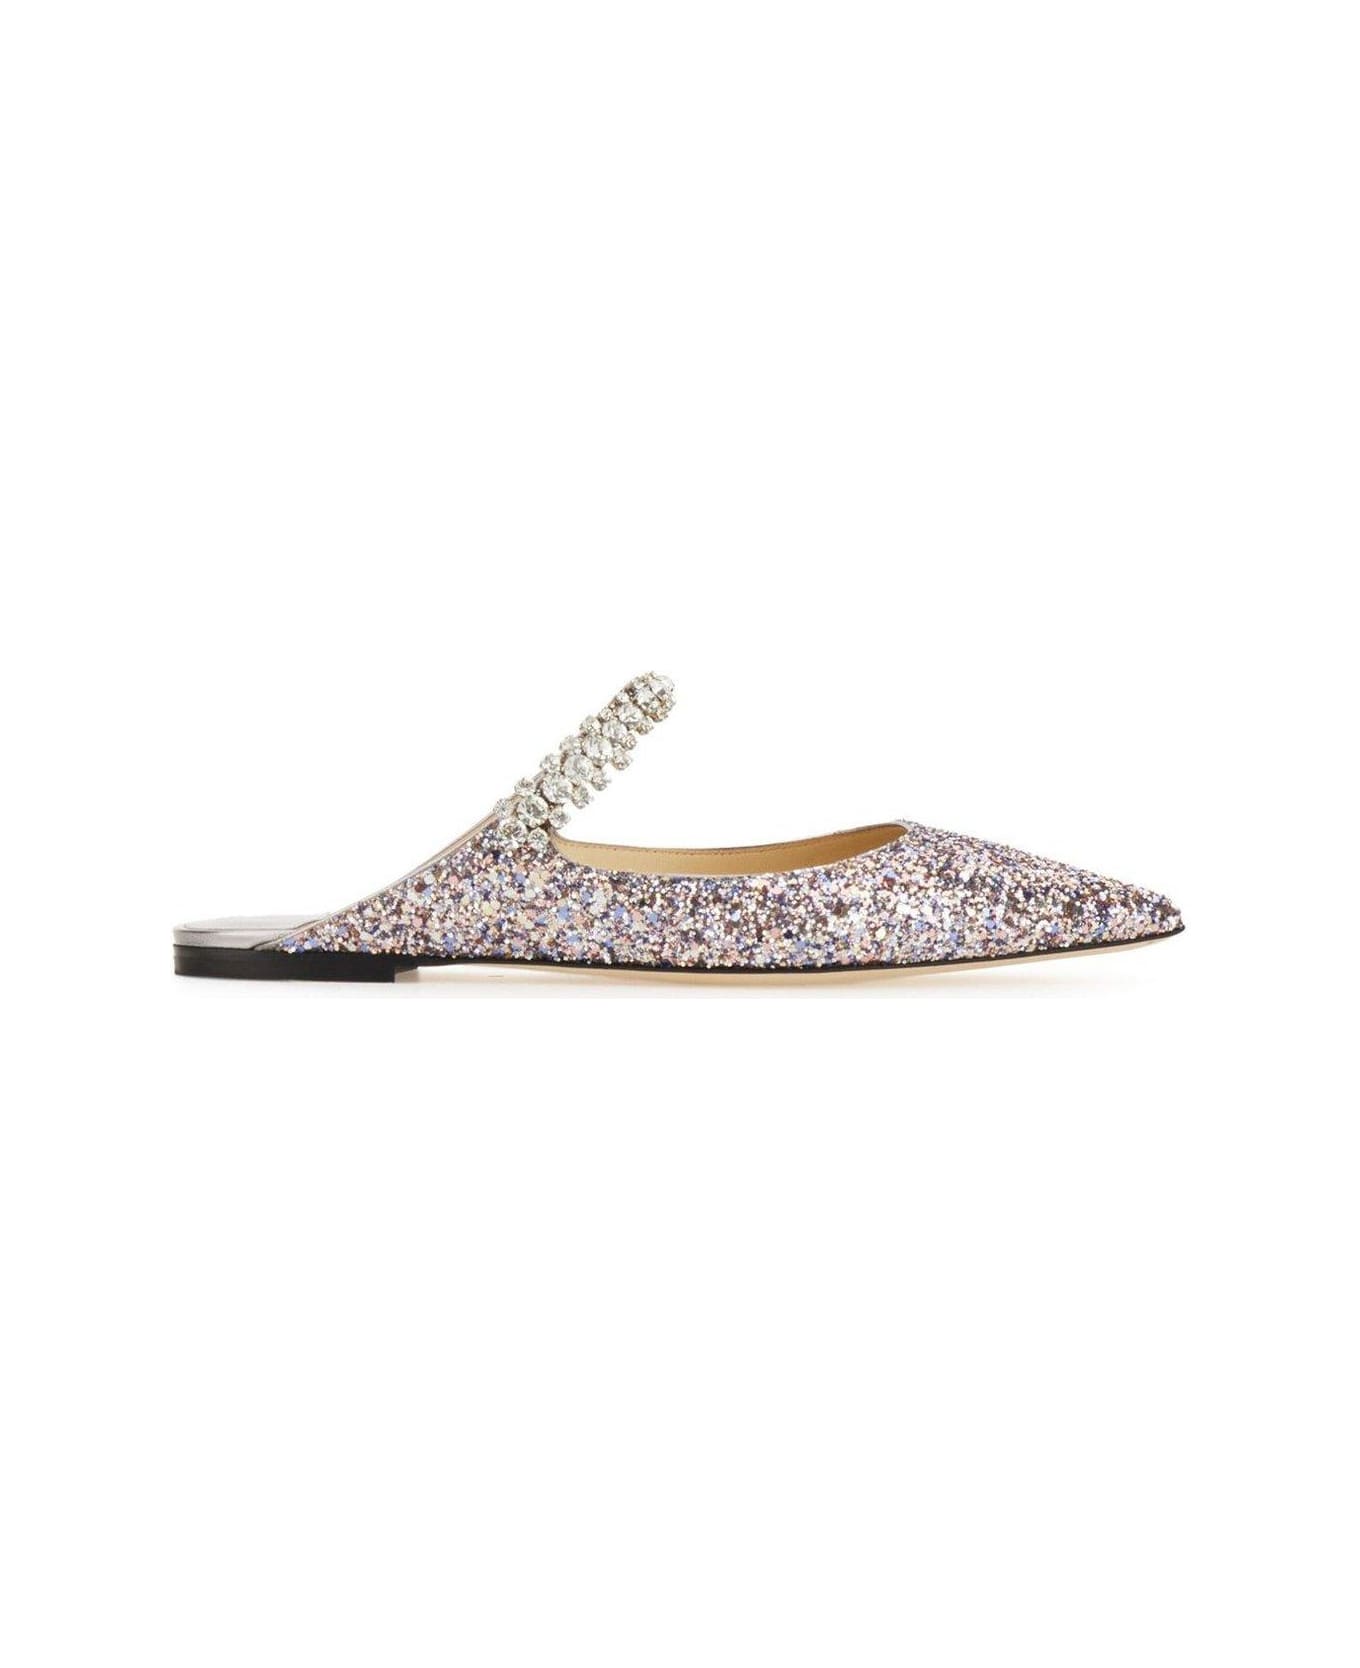 Jimmy Choo Bing Embellished Pointed Toe Ballerina Shoes - Silver フラットシューズ